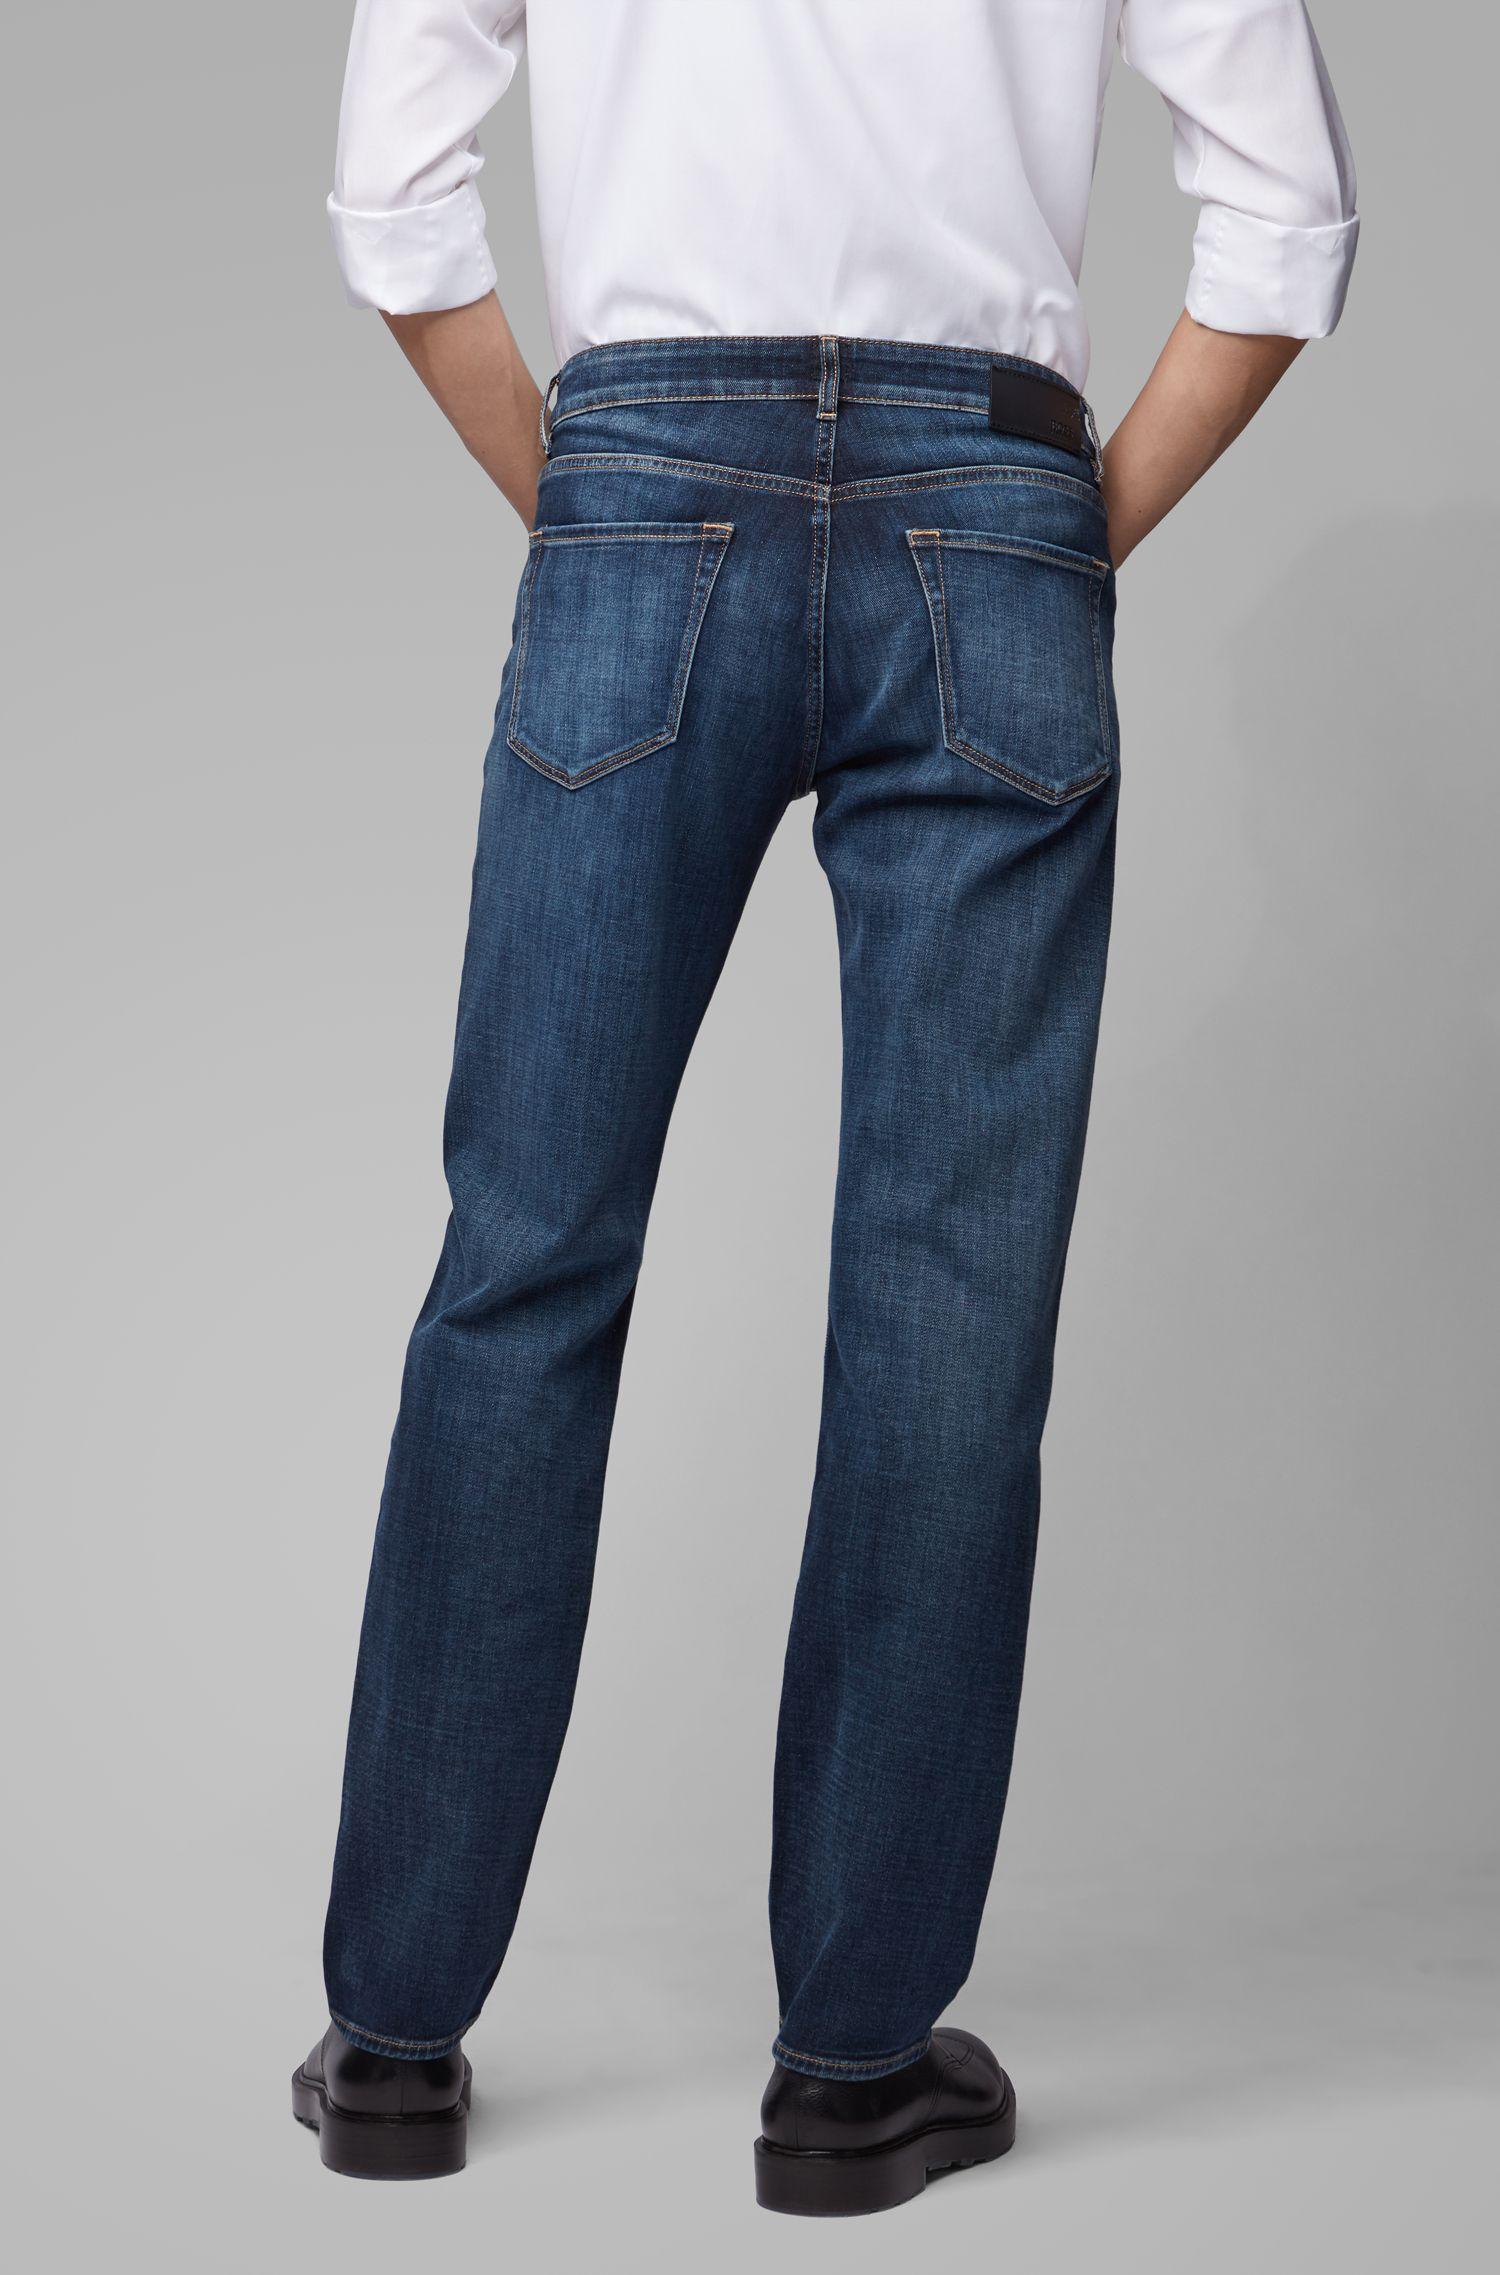 BOSS Regular-fit Jeans In Italian Cashmere-touch Denim in Blue for Men ...